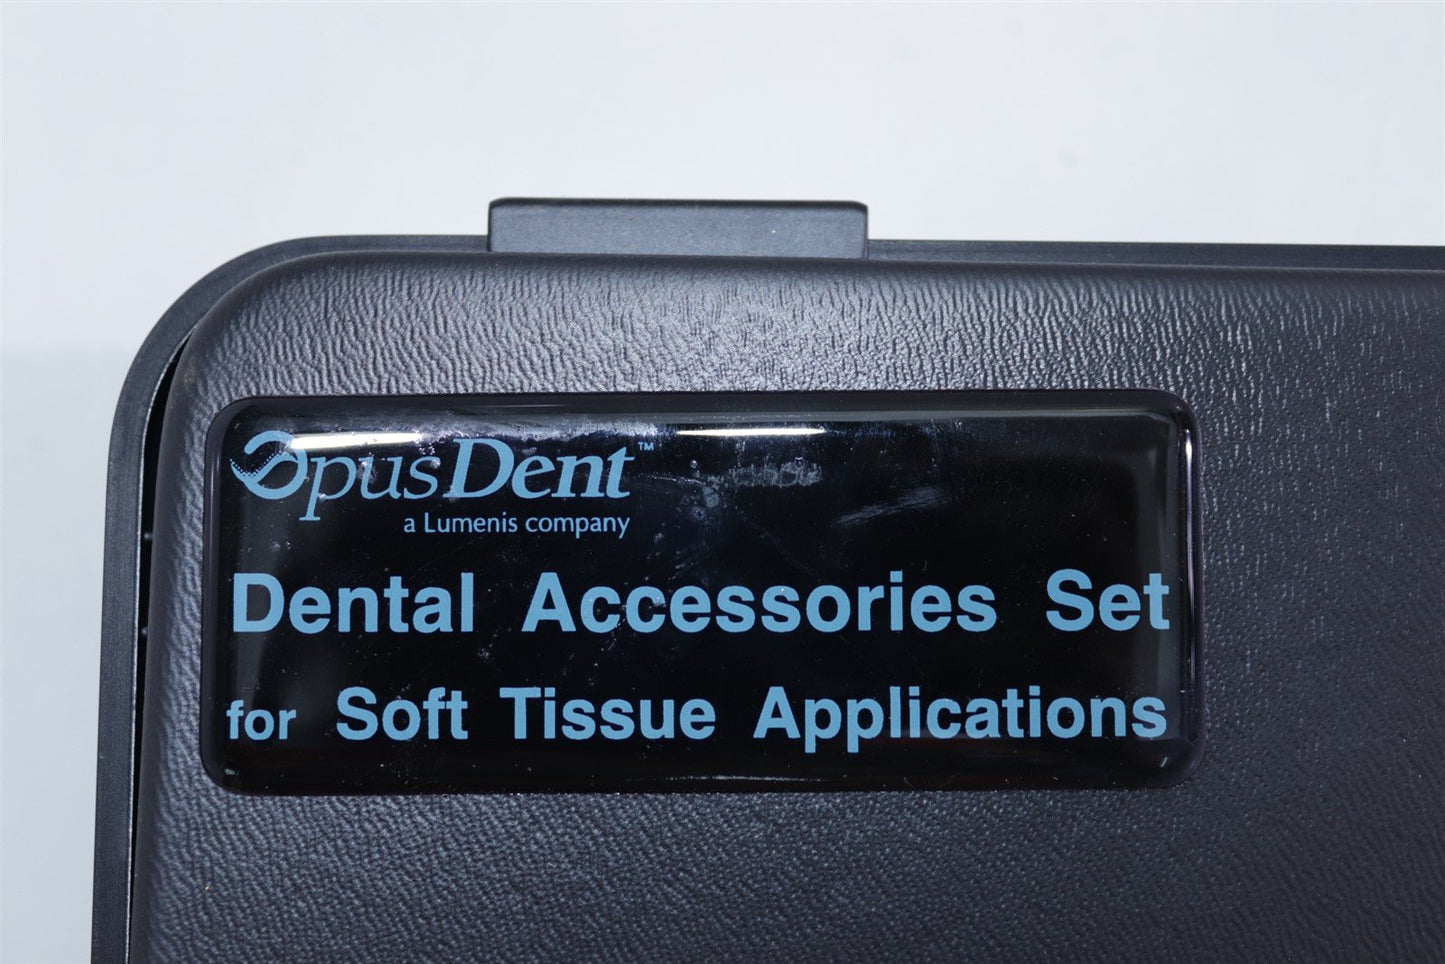 Lumenis AA2968401-0 OpusDent 14900 Dental Accessories Set for Soft Tissue App.